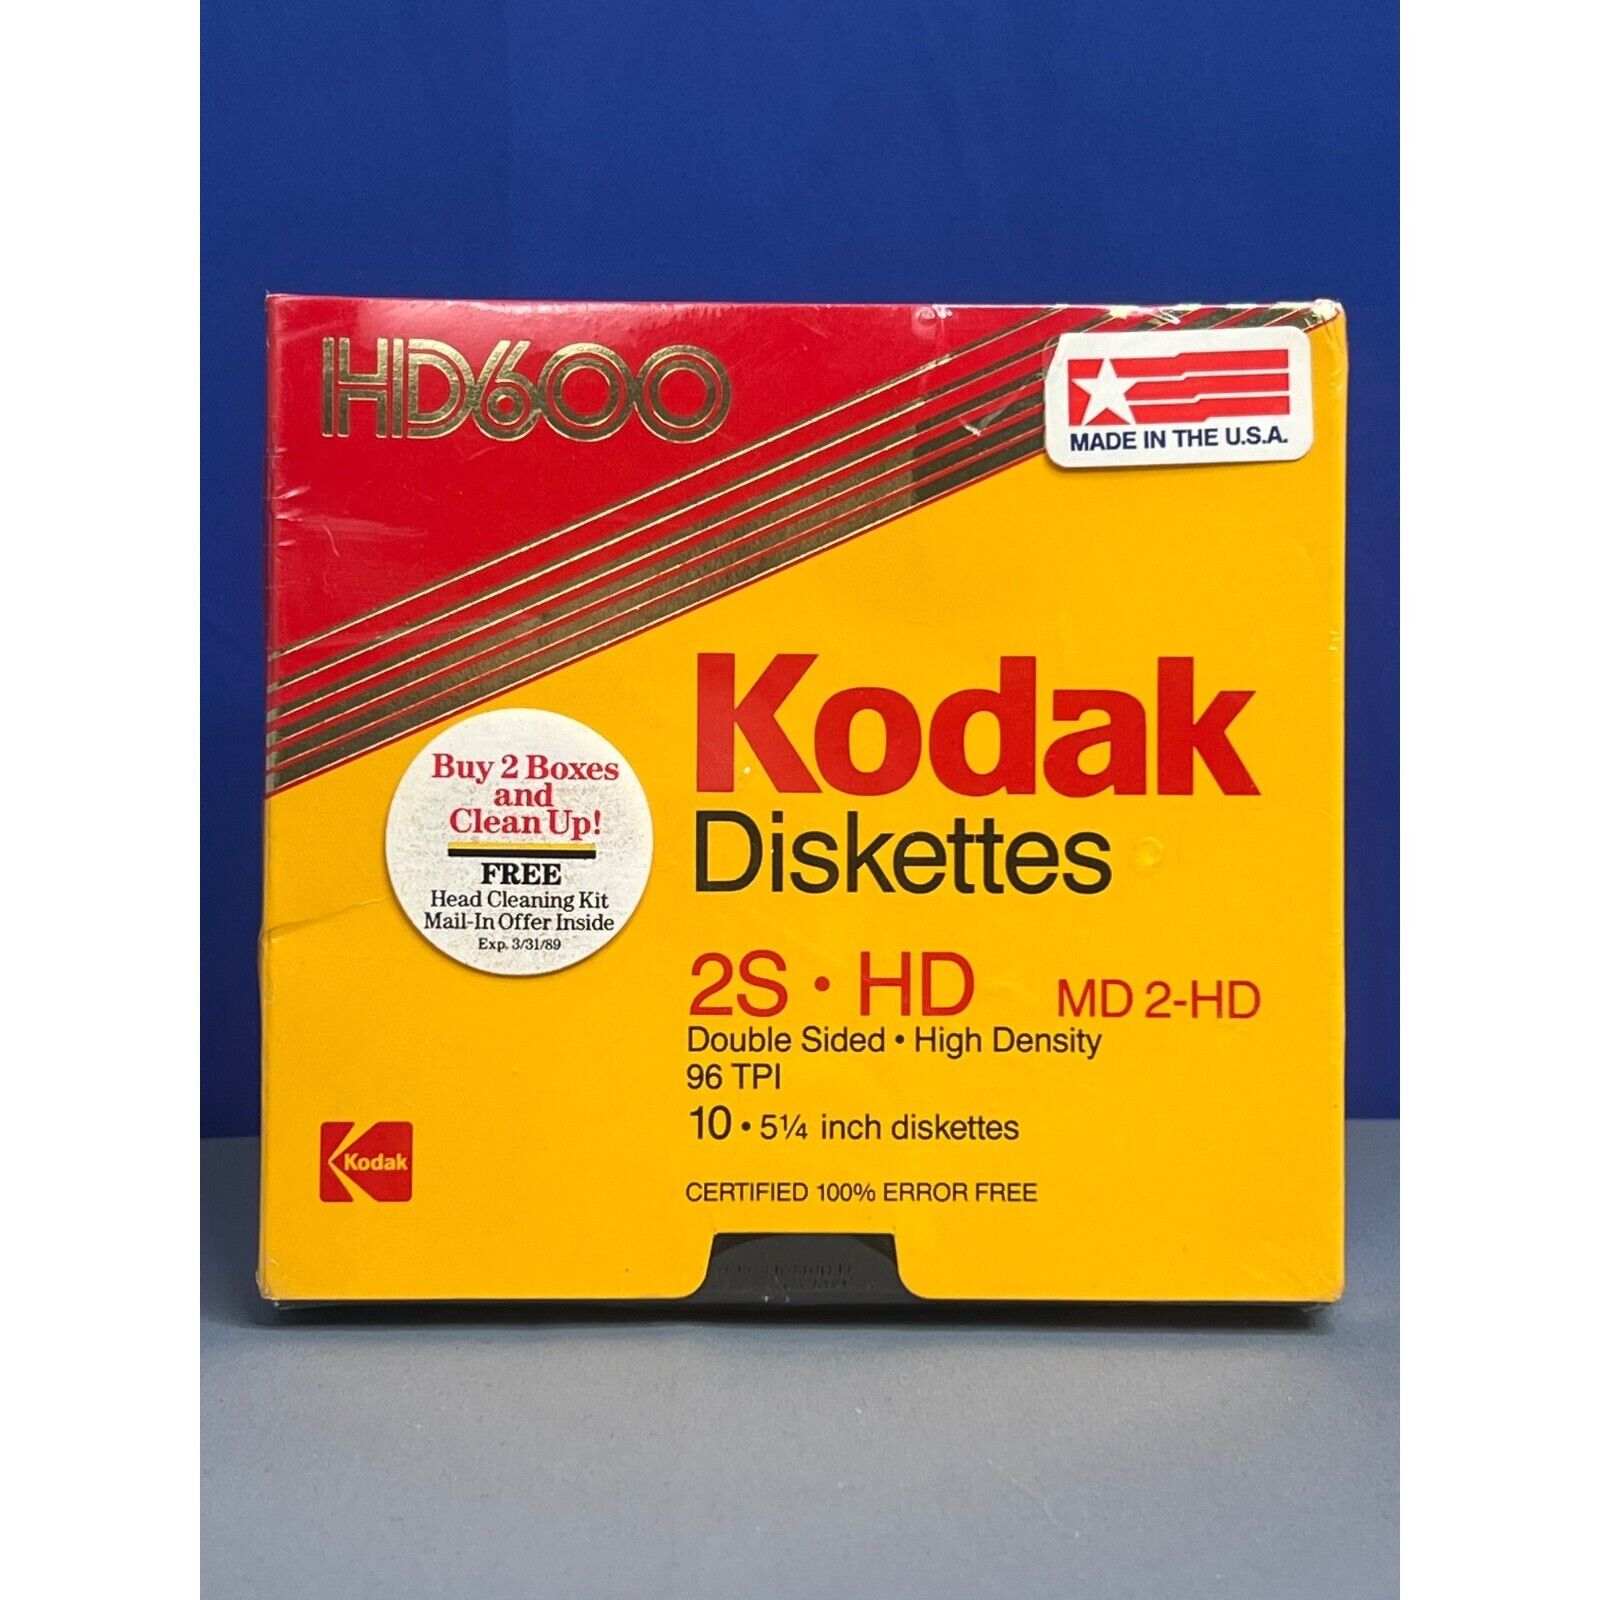 New KODAK HD600 DISKETTES MD 2-HD BOX OF 10 Sealed Made In The USA 96 TPI NIB